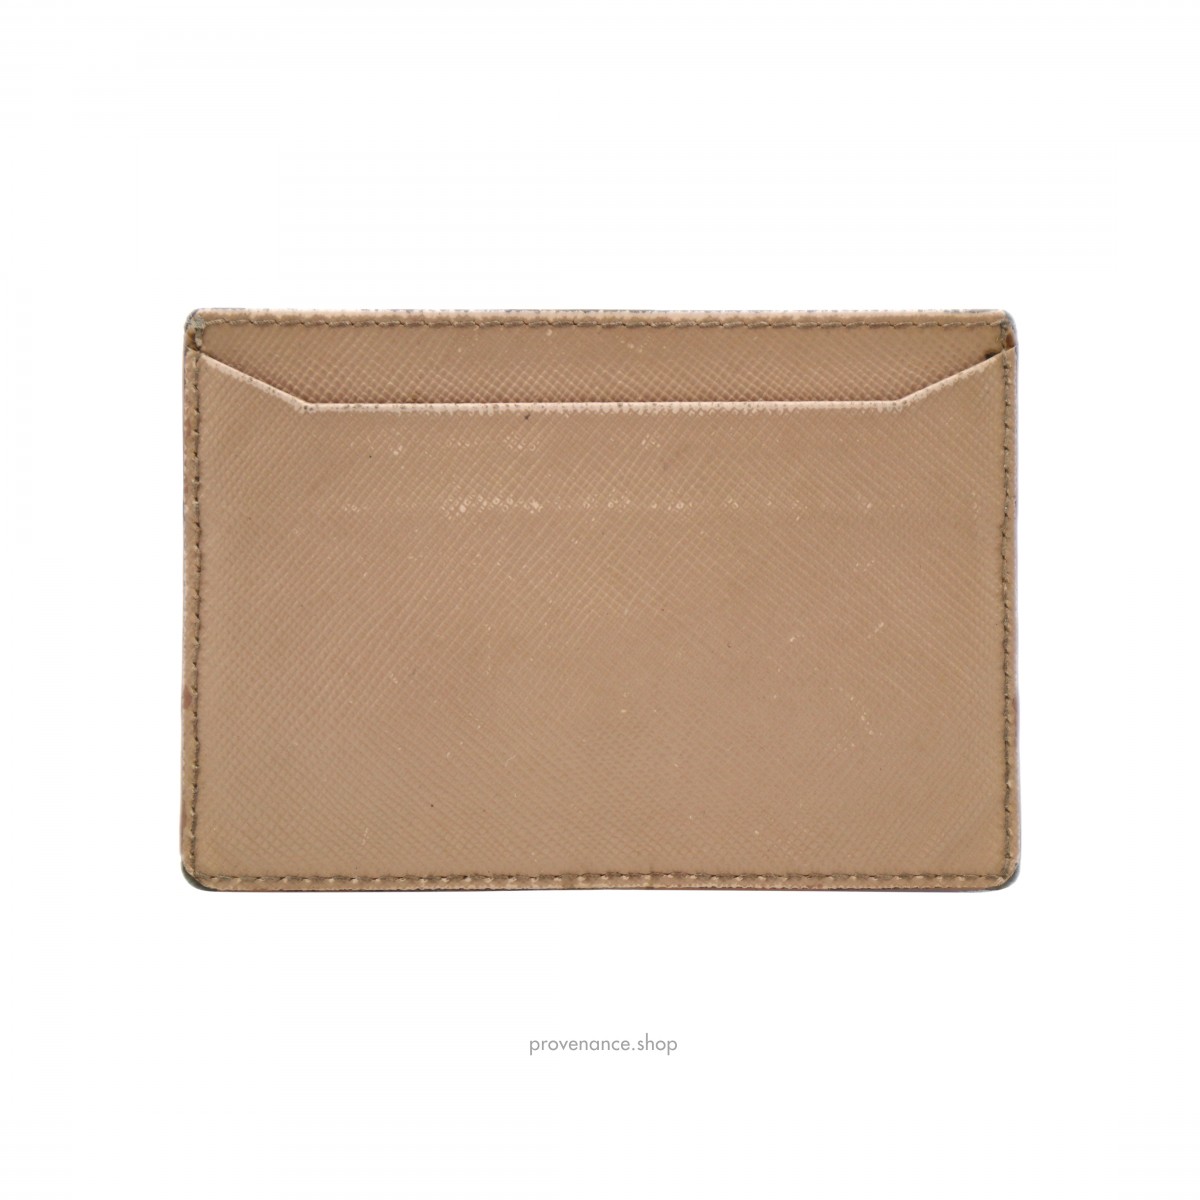 Prada Cardholder Wallet - Peach Saffiano Leather - 2